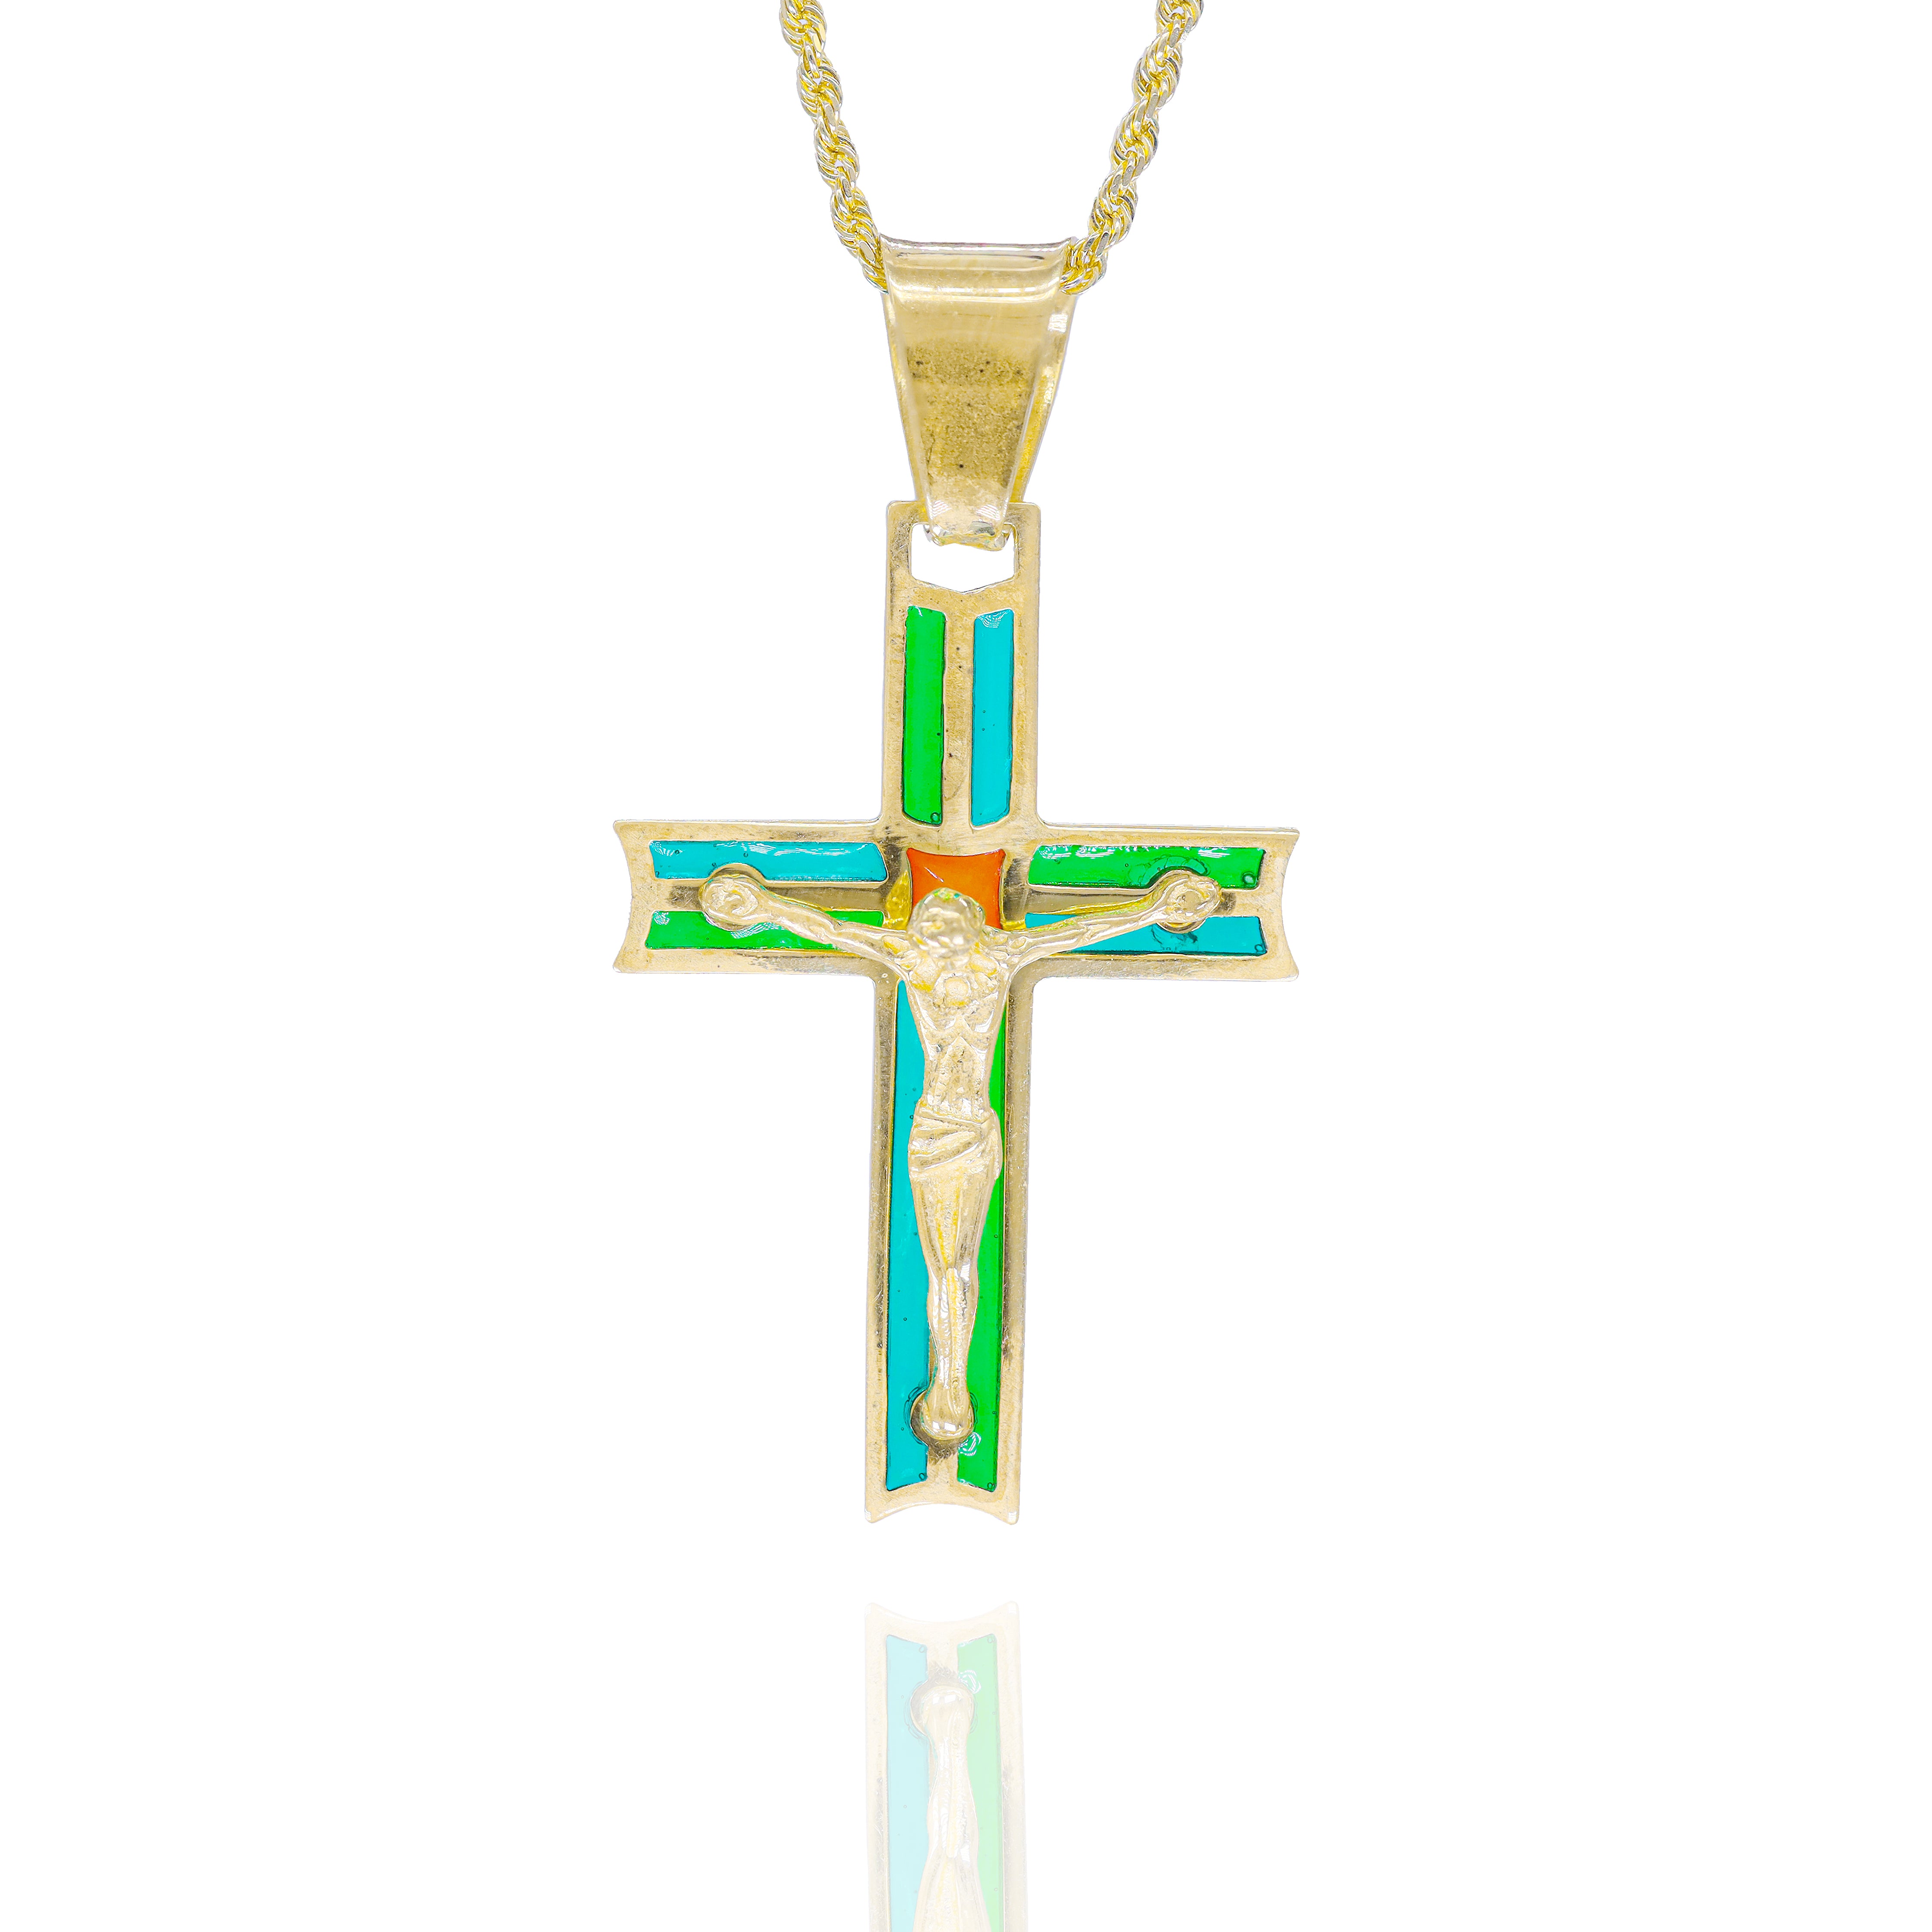 Enamel Cross with Solid Gold Jesus Pendant